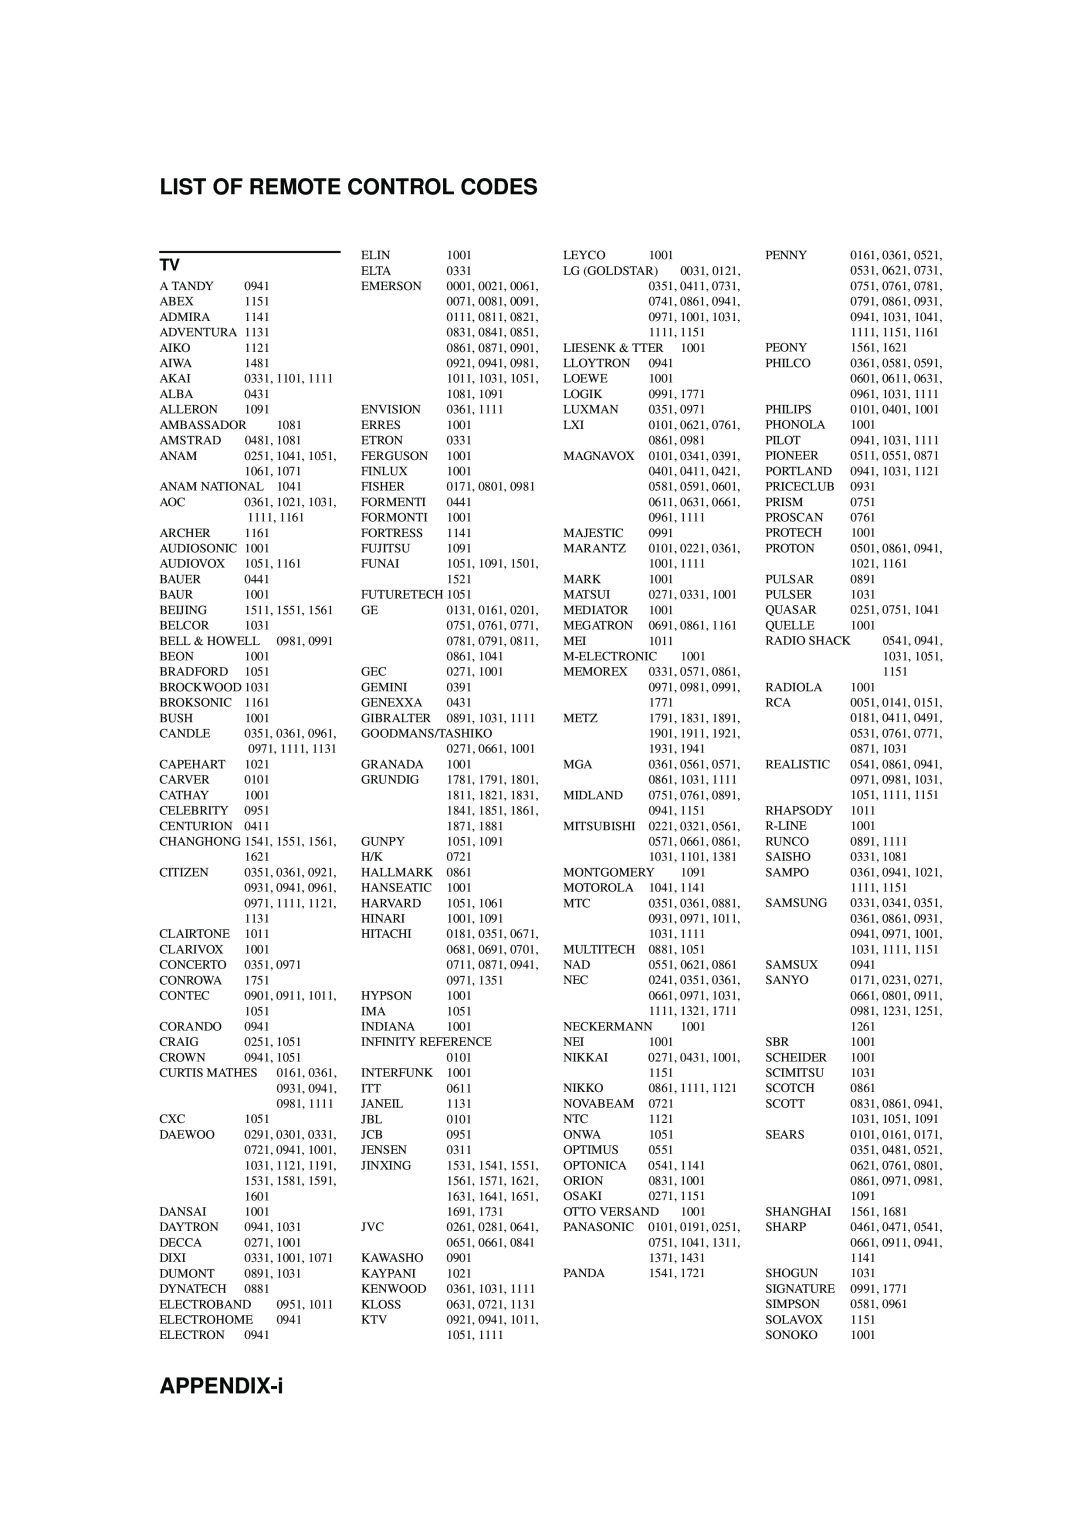 Yamaha RX-V457 owner manual List Of Remote Control Codes, APPENDIX-i 